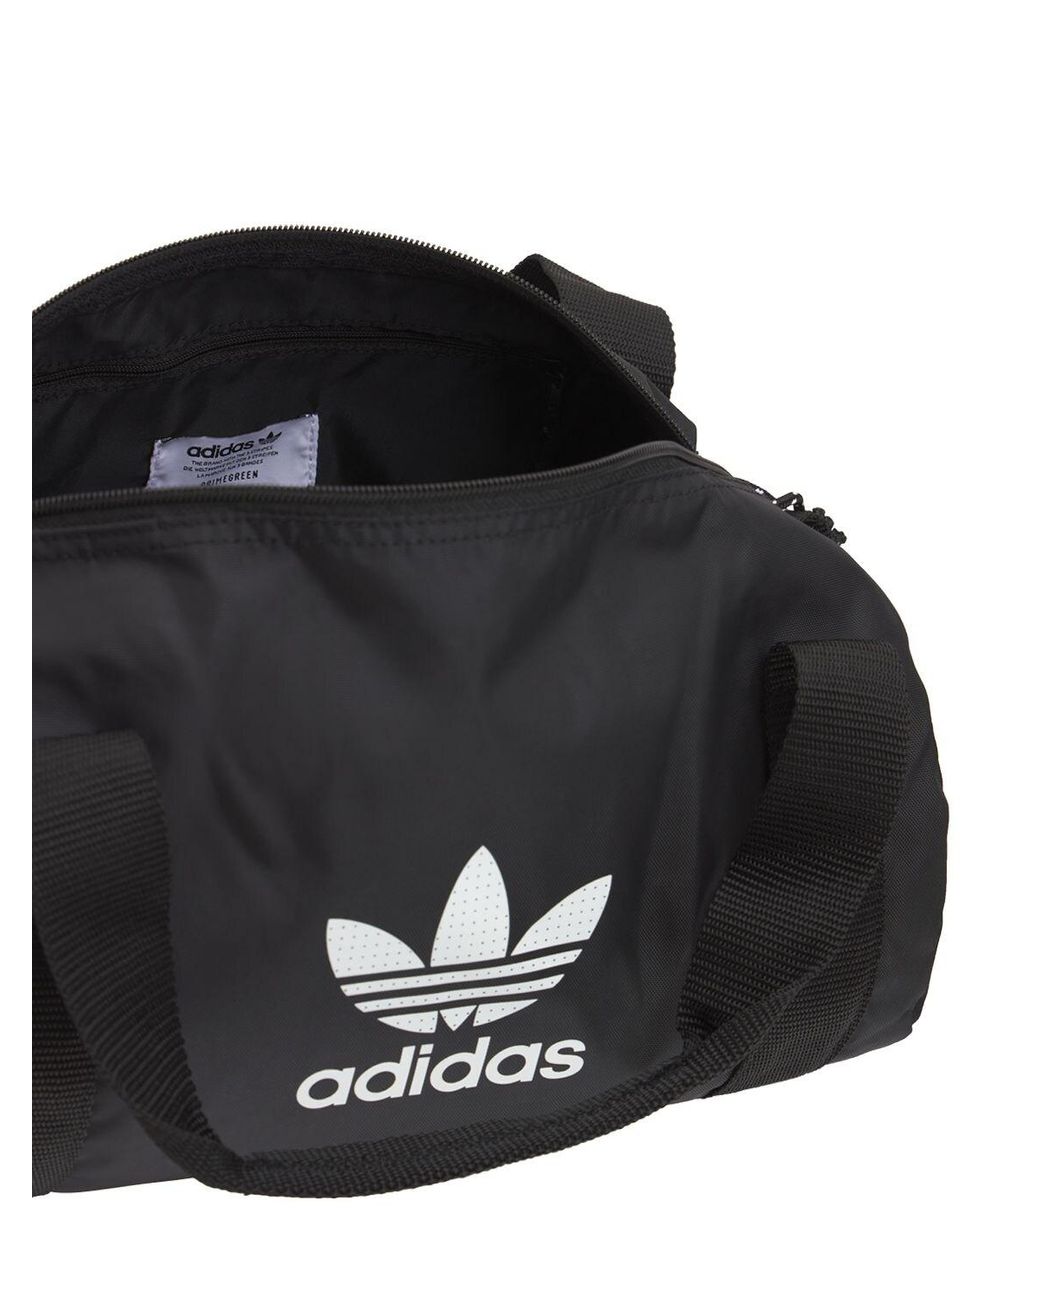 adidas Originals Duffle Bag in Black/White (Black) for Men - Lyst